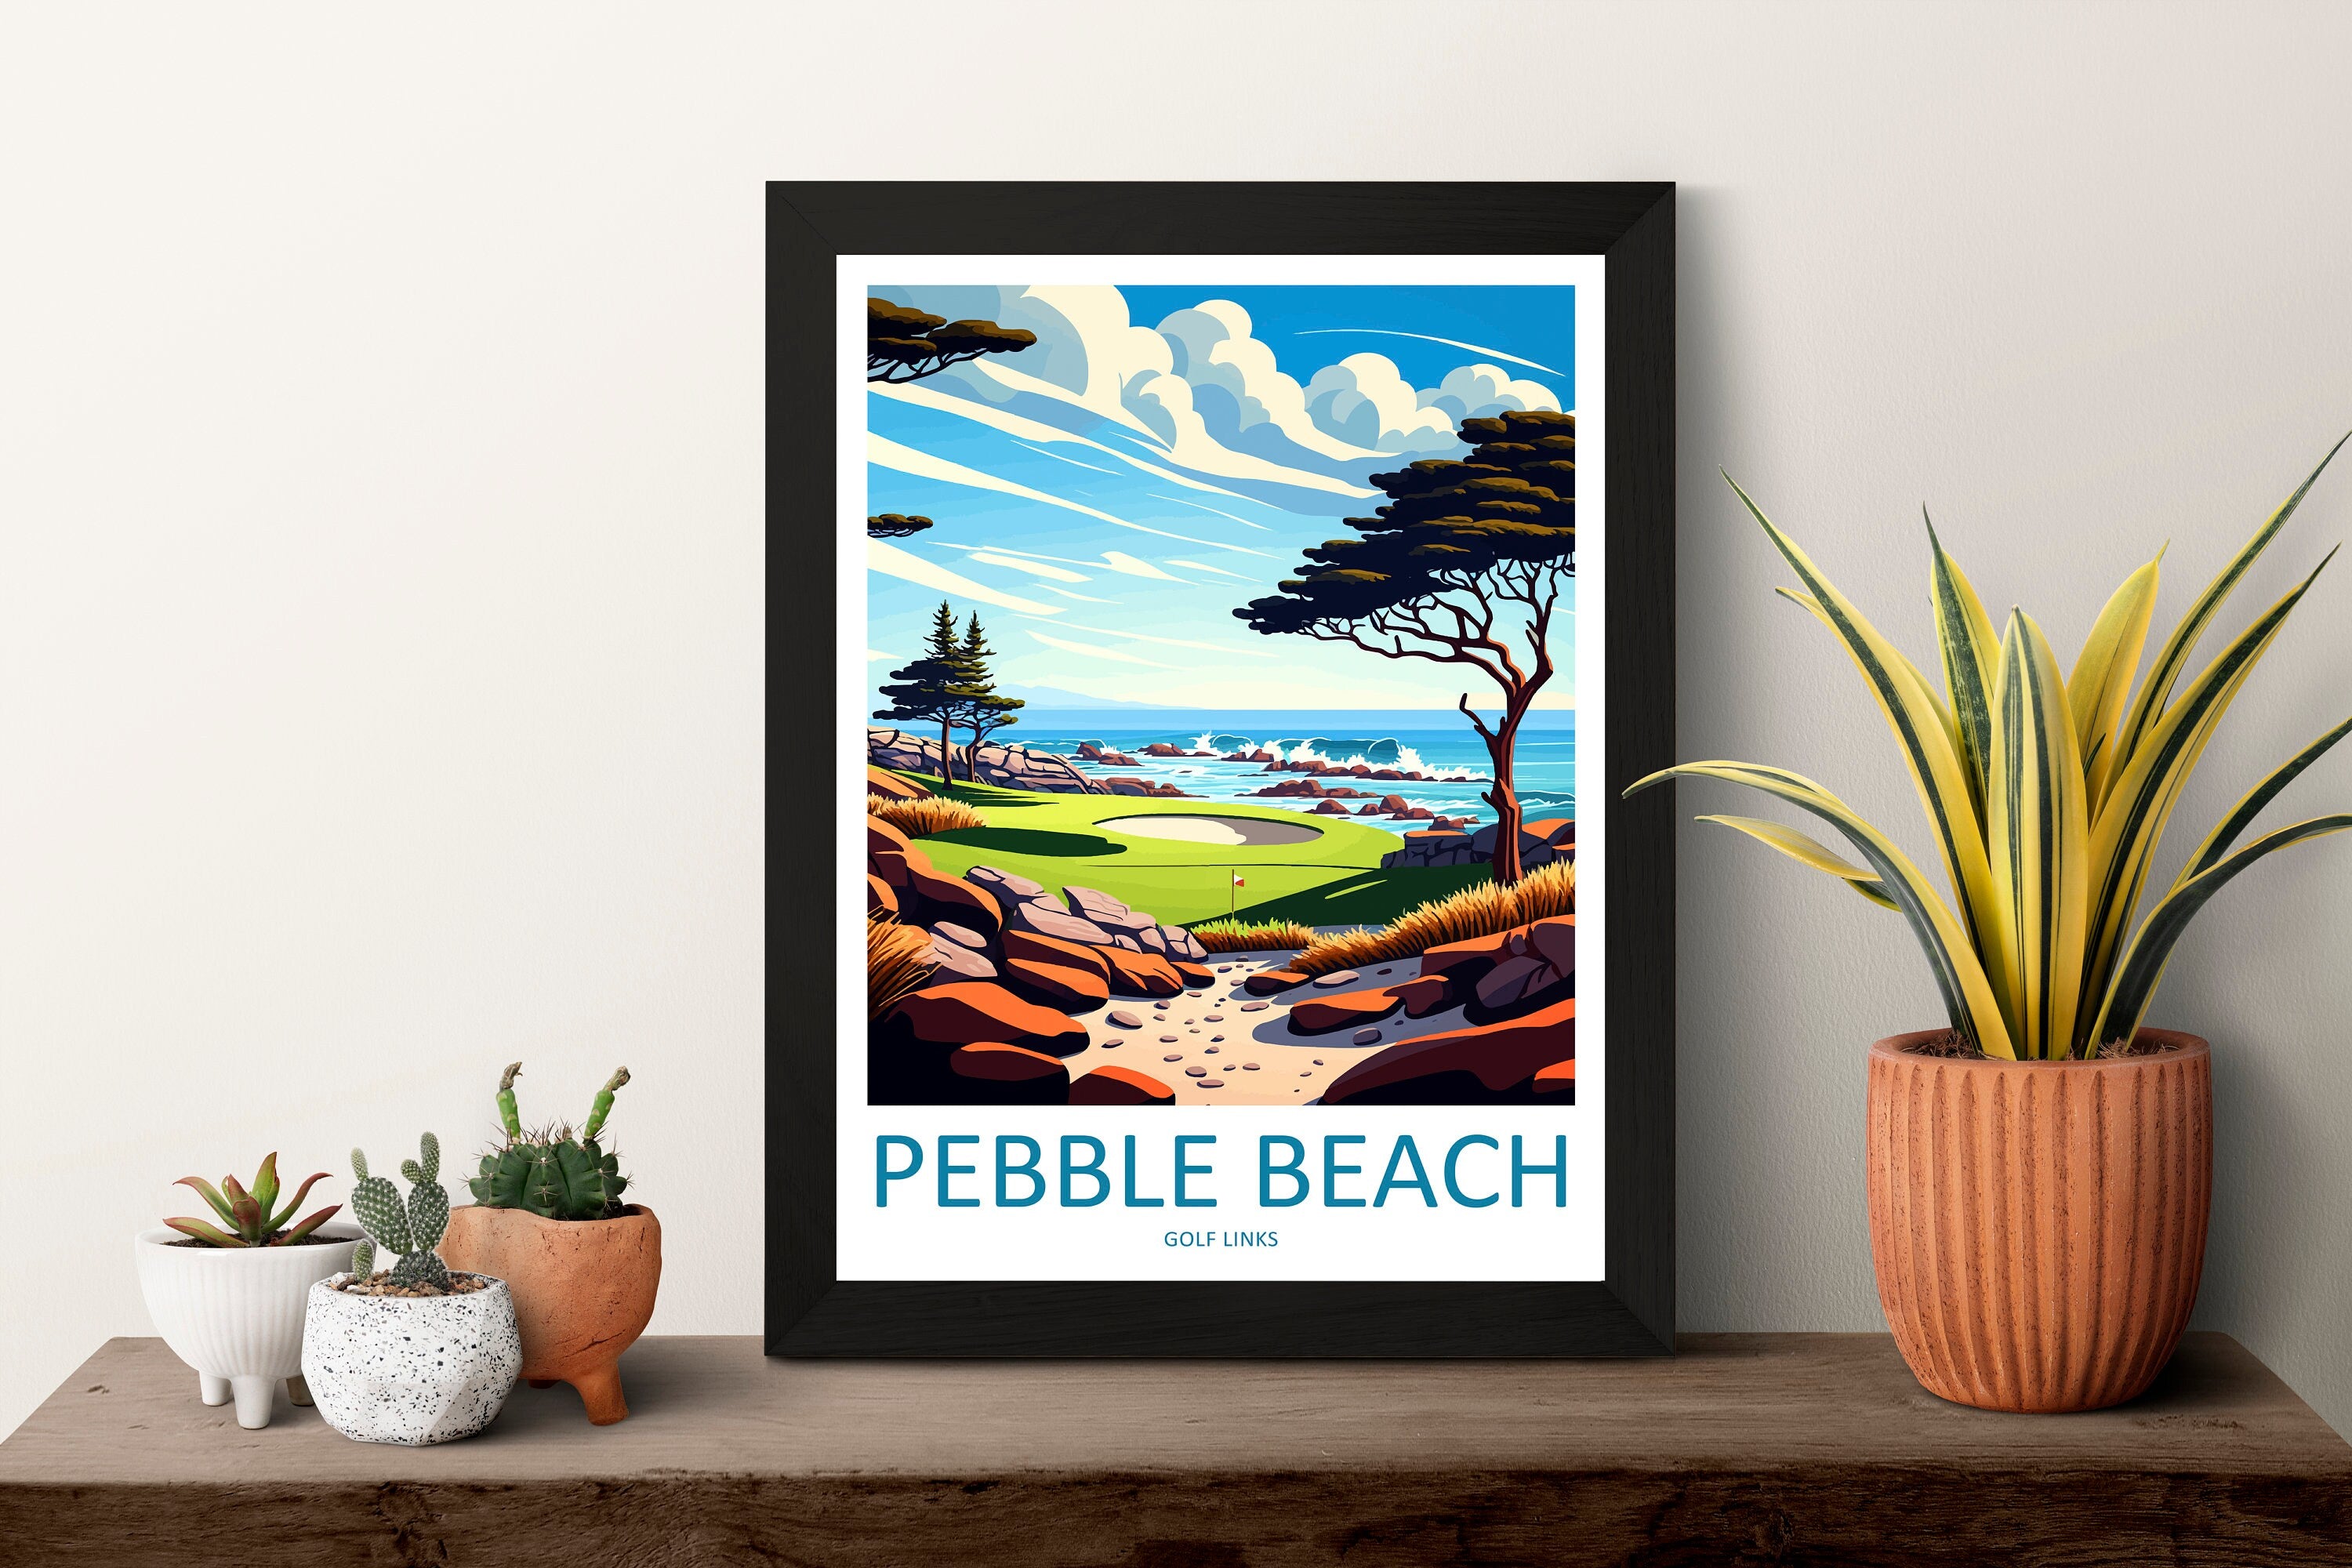 Pebble Beach Golf Links Travel Print Wall Art Pebble Beach Golf Links Wall Hanging Home Décor Pebble Beach Golf Links Gift Art Lovers